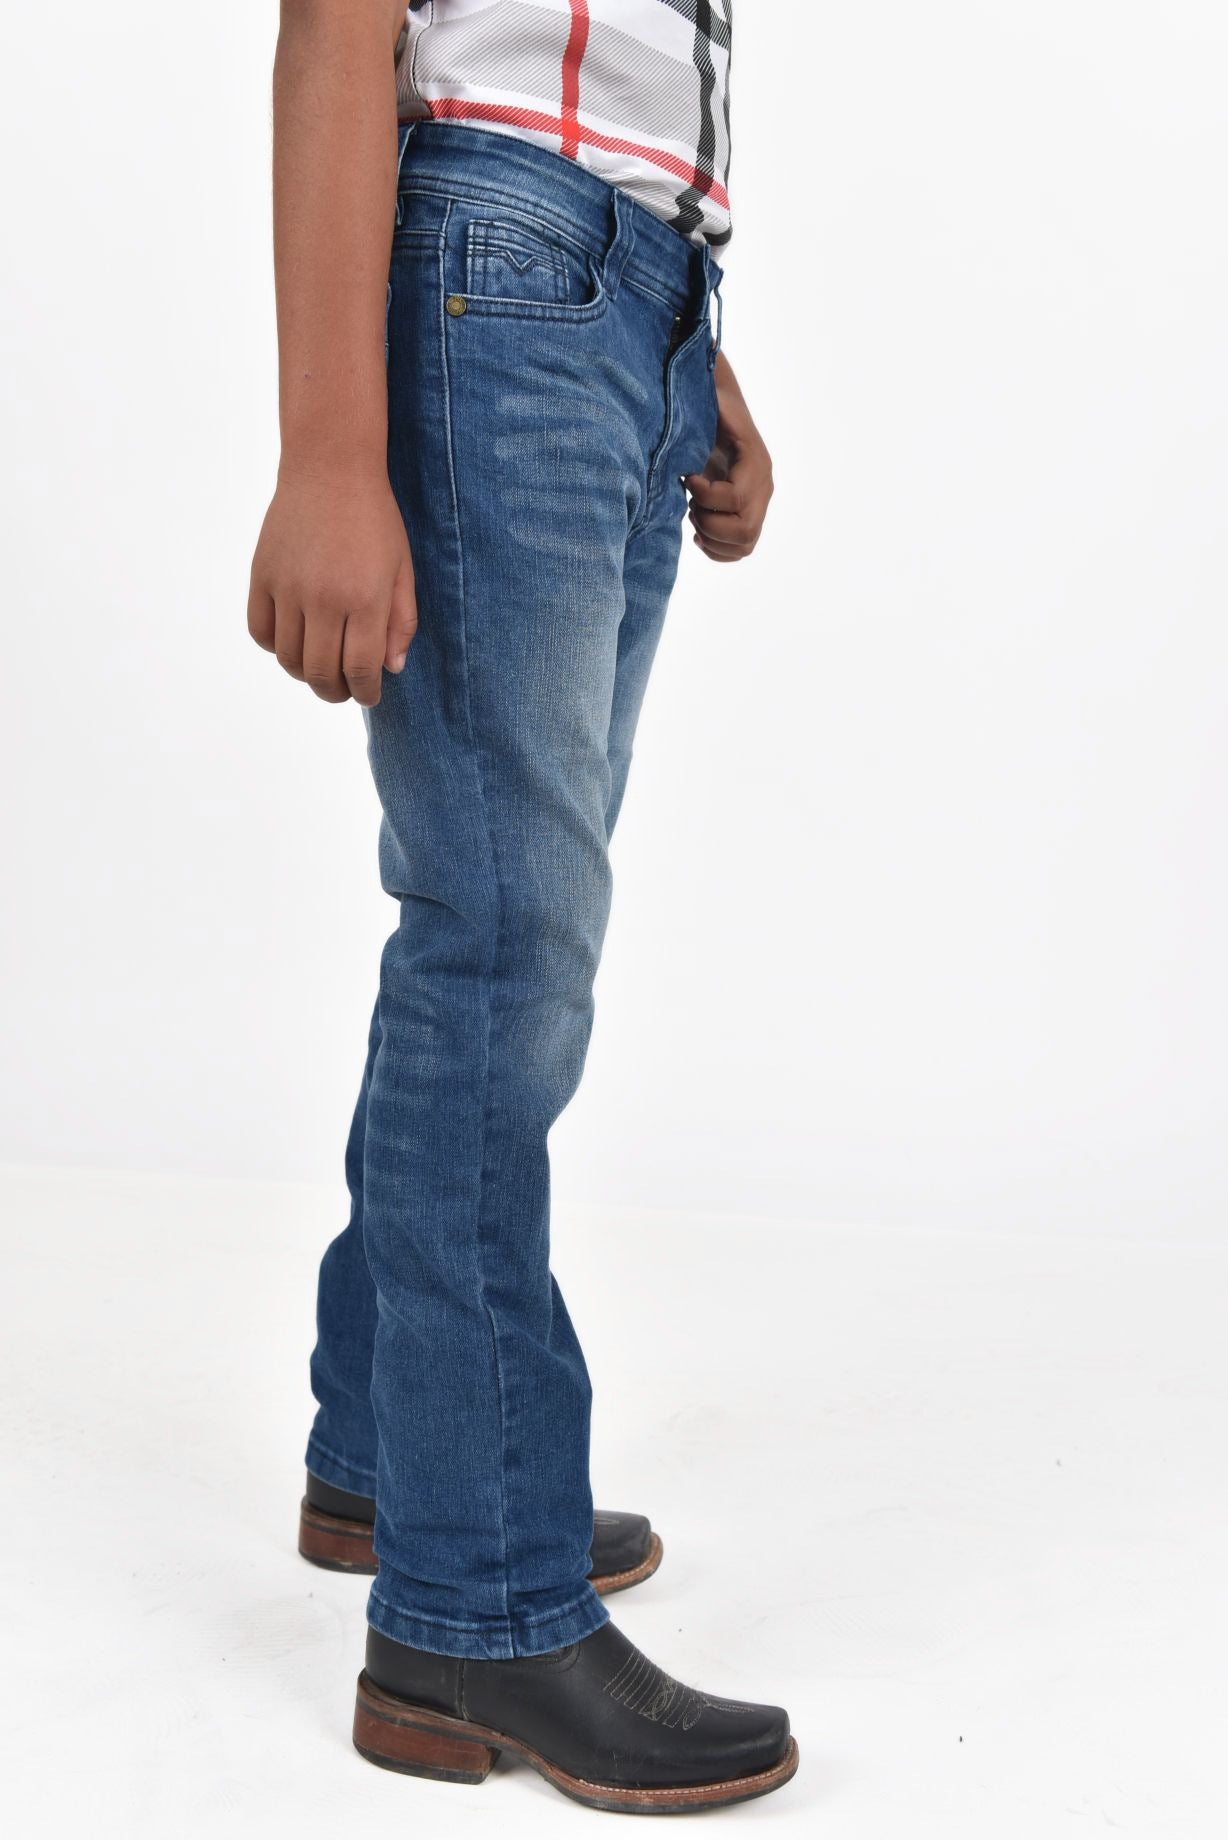 Pax Kid's Med Blue Slim Stretch Jeans